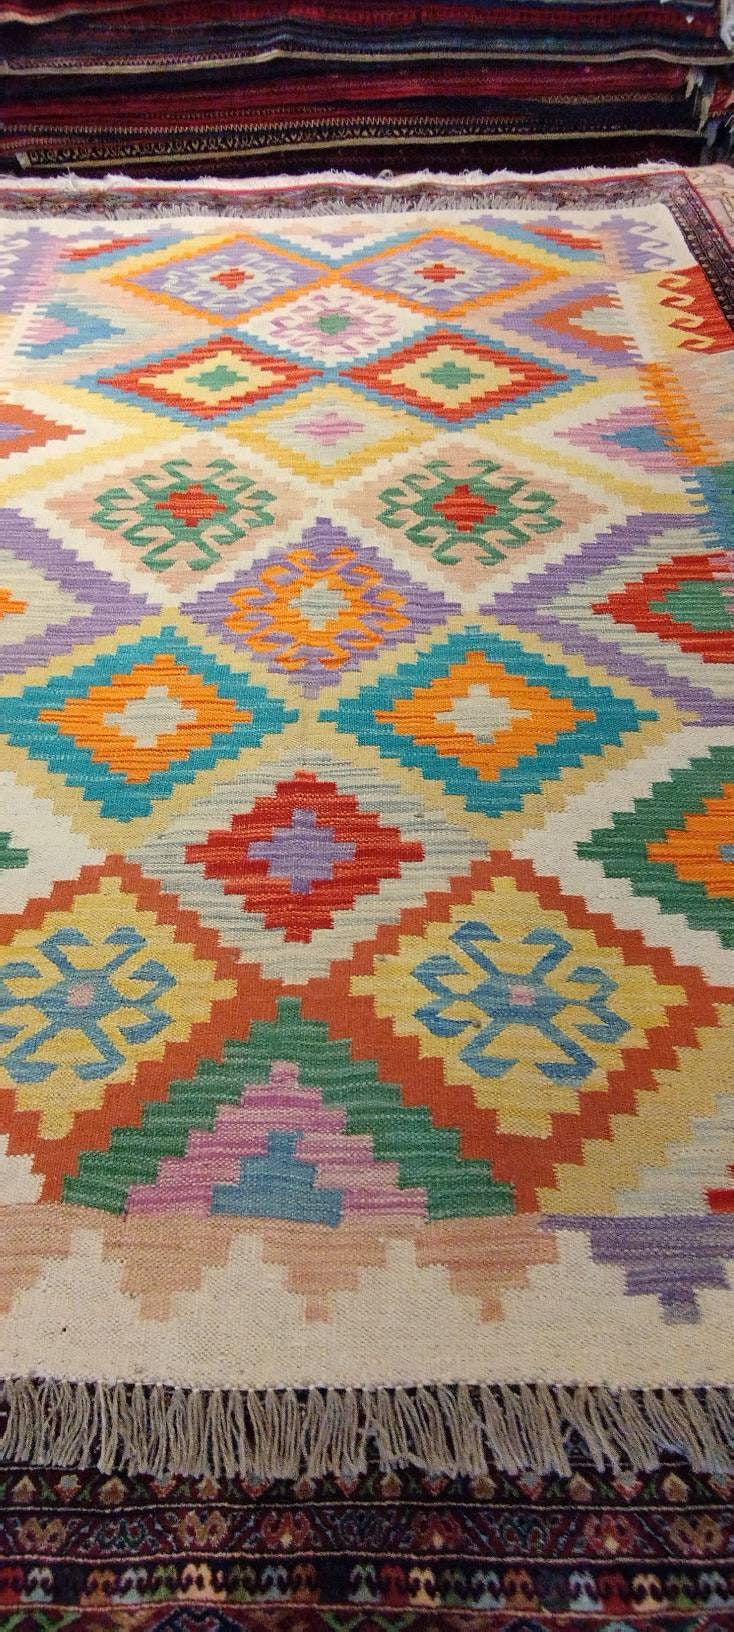 Colorful kilimrug, Afghan handmade kilim 100% Wool, Flat weave rug, Geometric kilim rug, kitchen rug, bedroom rug, living room rug, décor